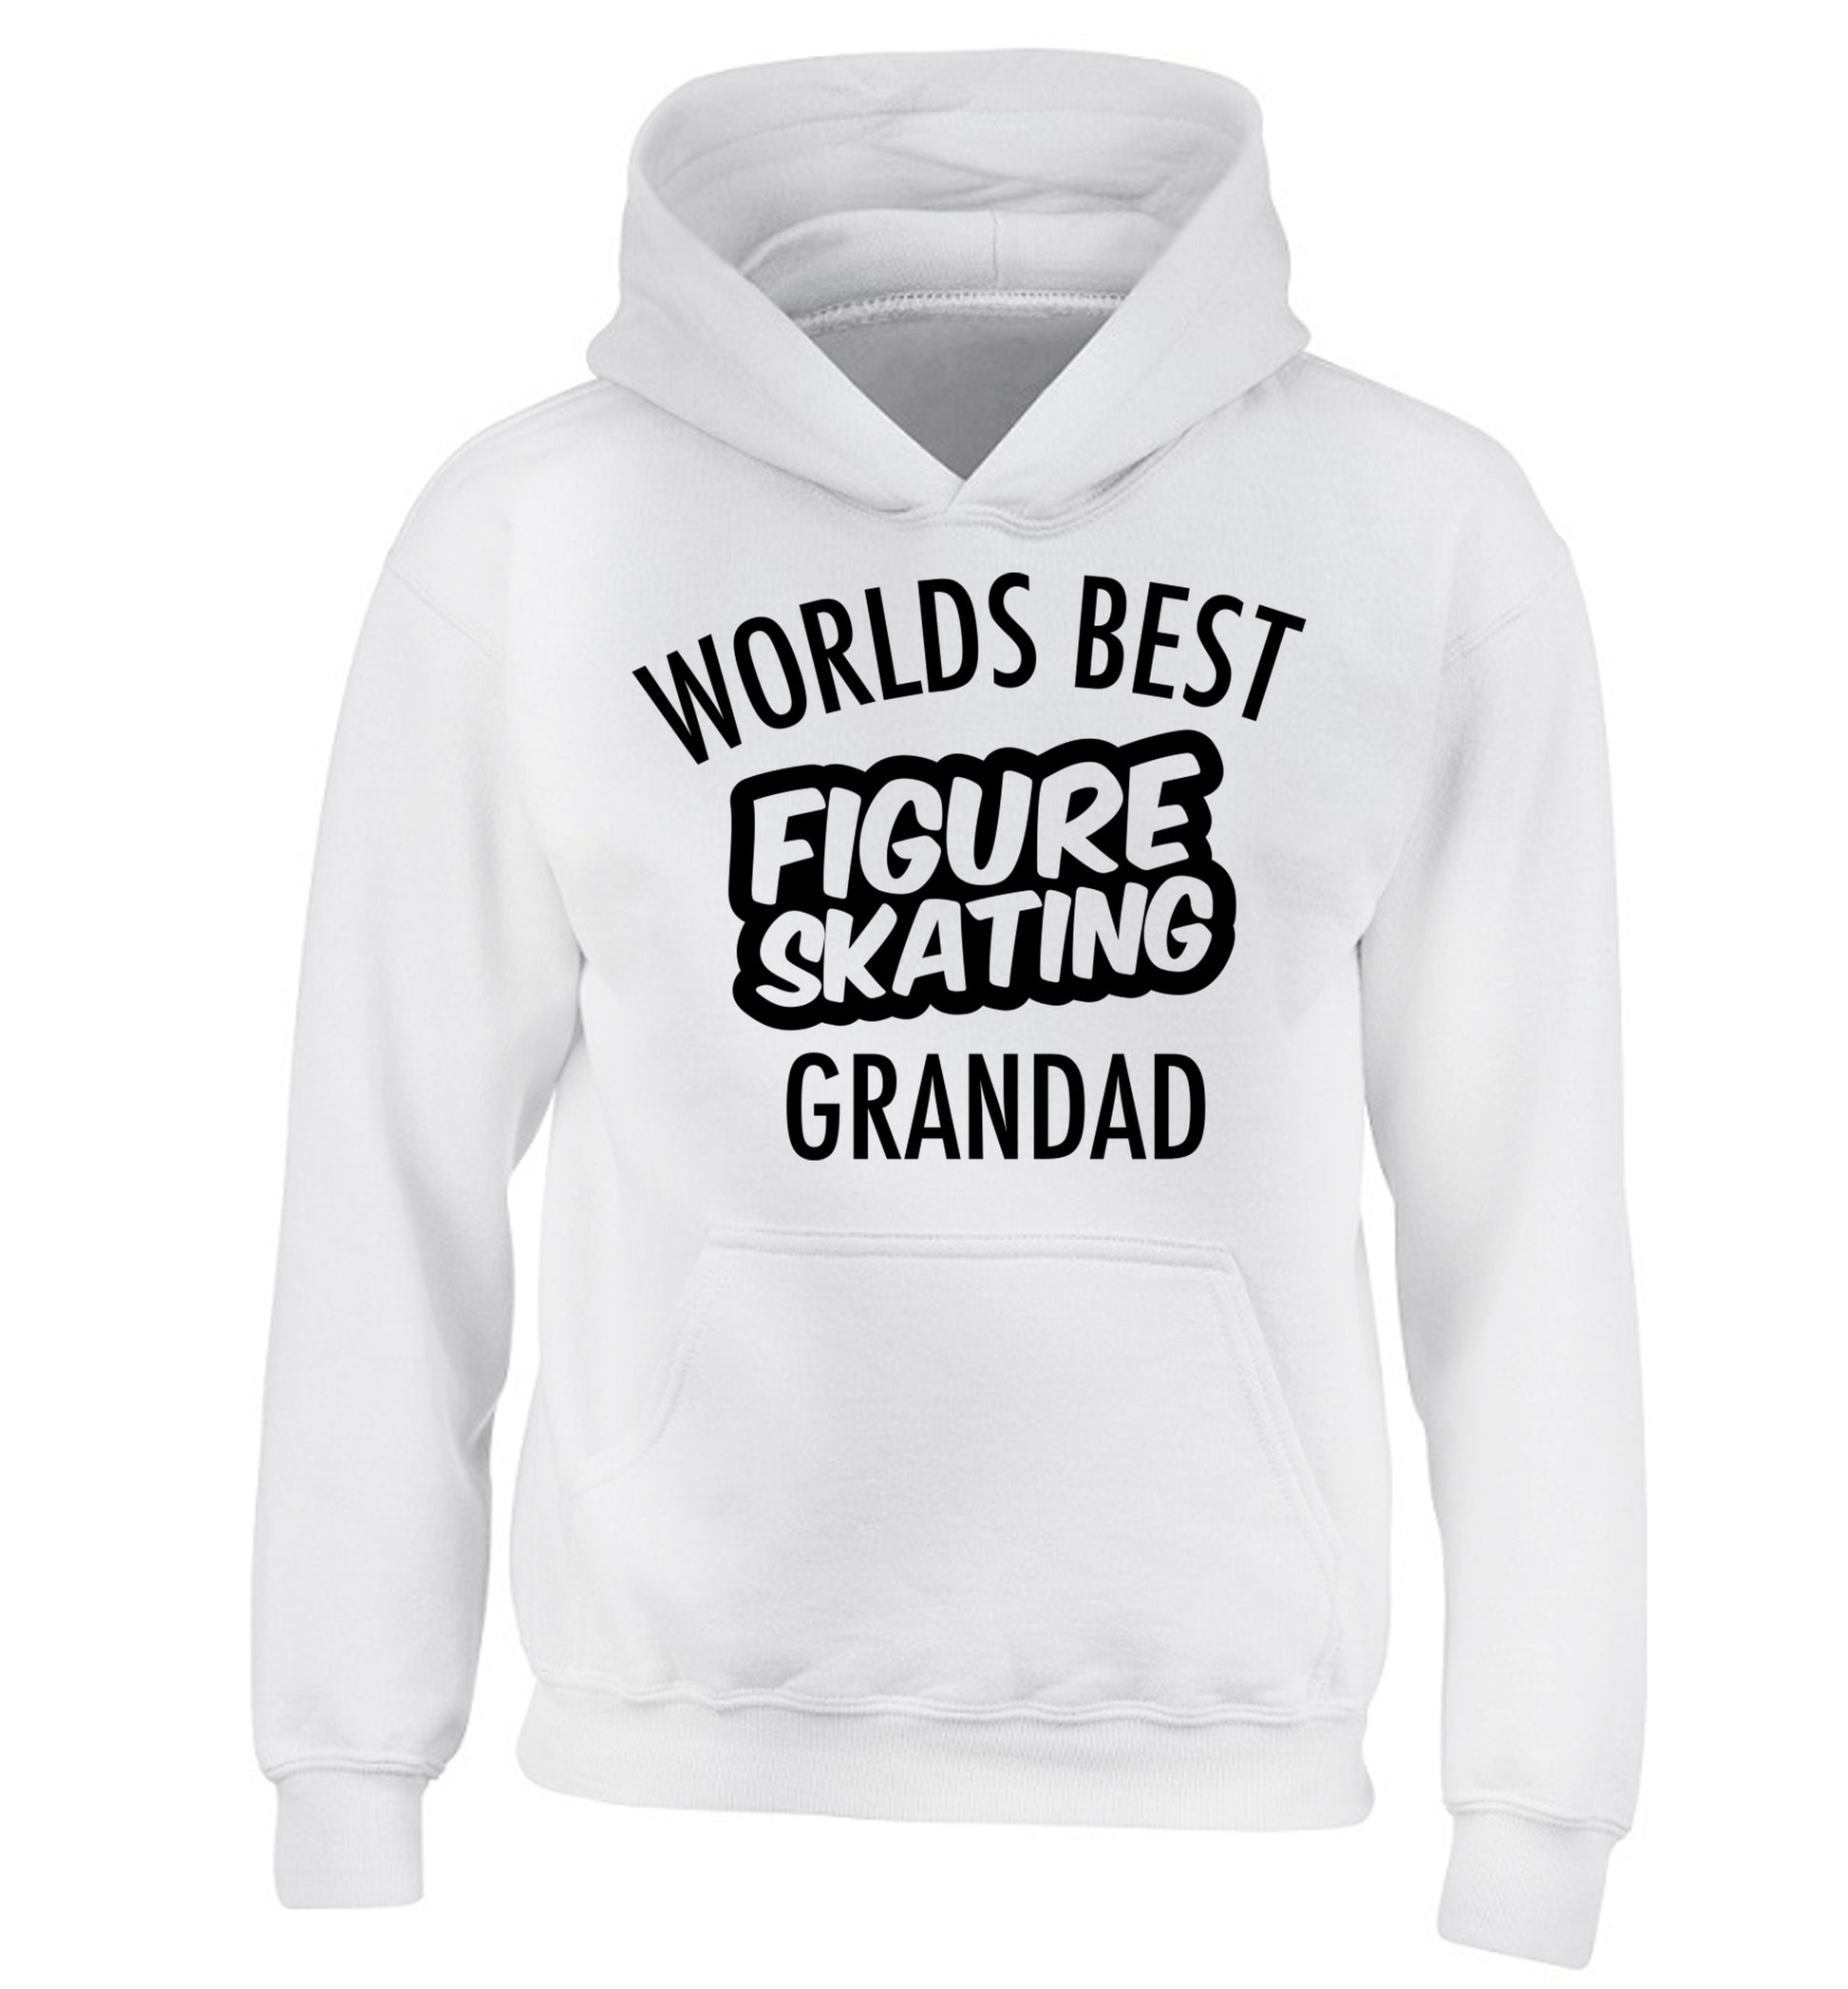 Worlds best figure skating grandad children's white hoodie 12-14 Years